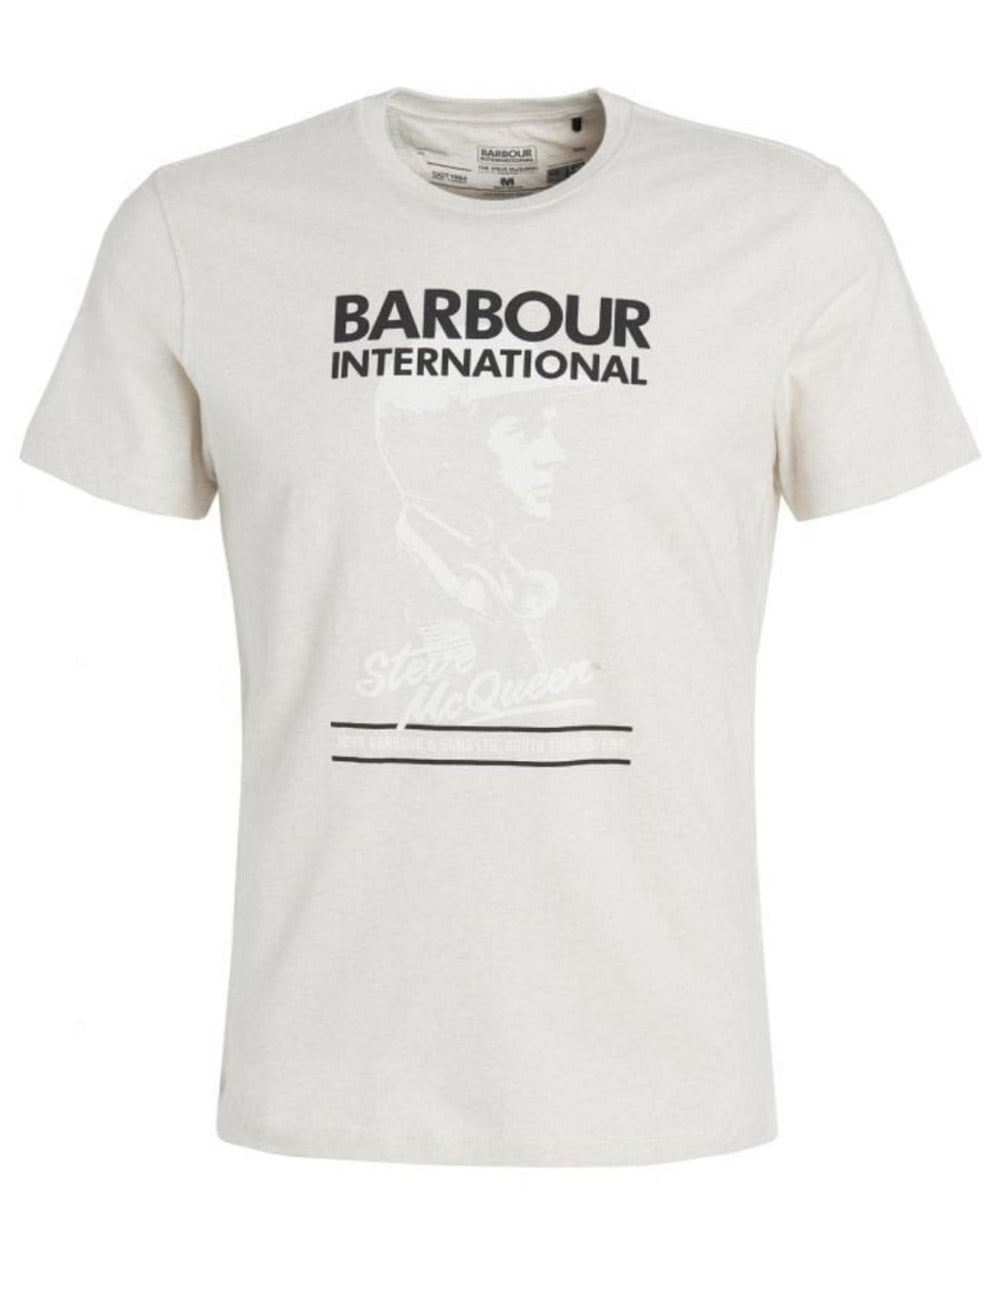 BARBOUR INTERNATIONAL B.INTL TAYLOR TEE